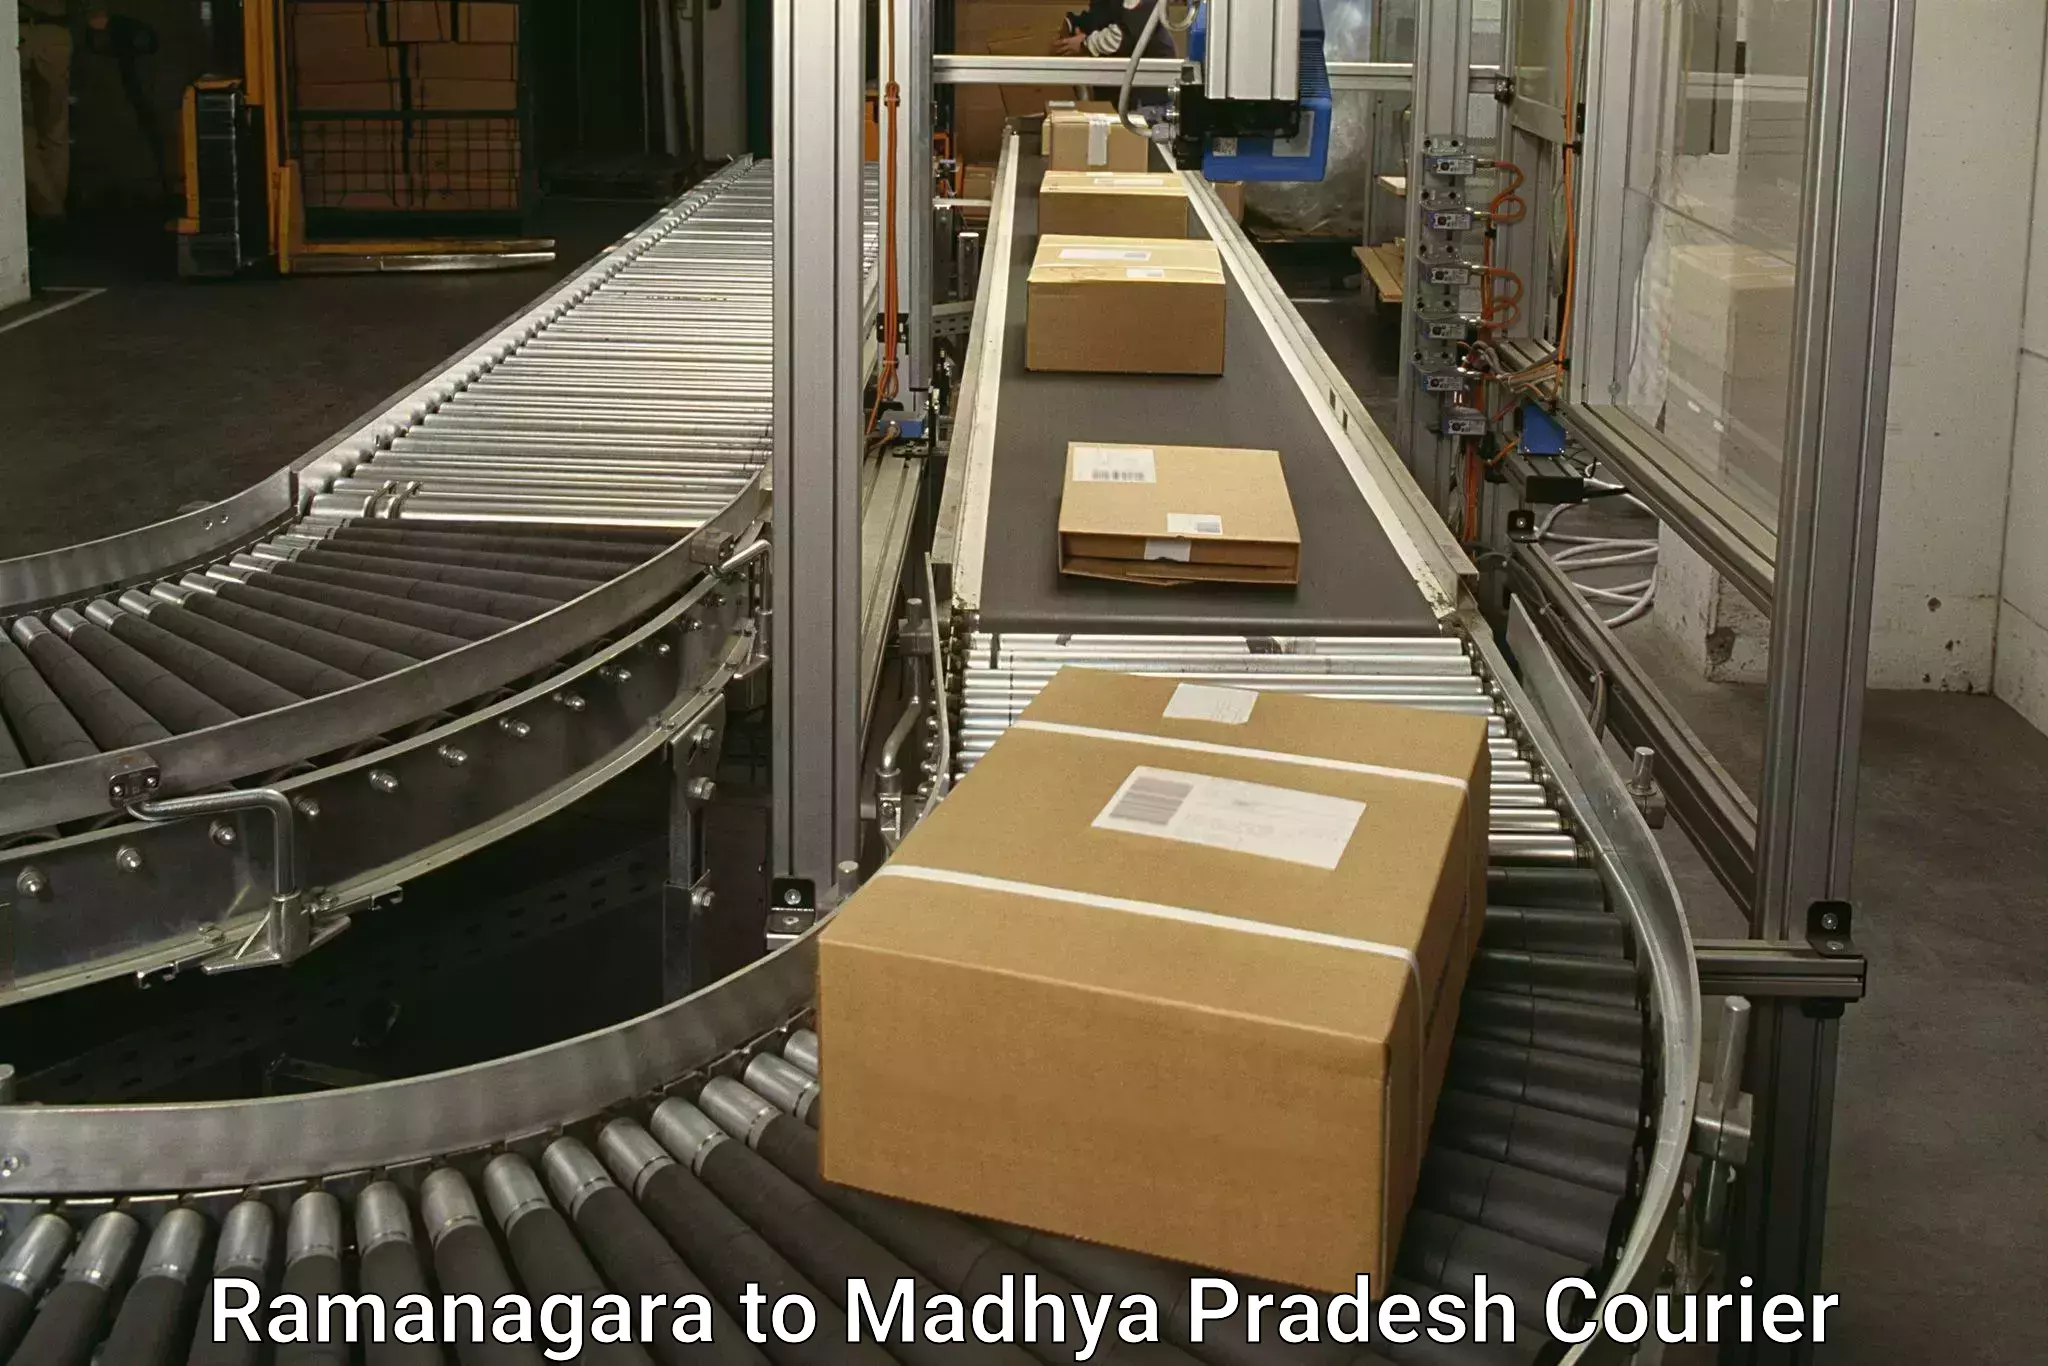 Courier service comparison Ramanagara to Hoshangabad